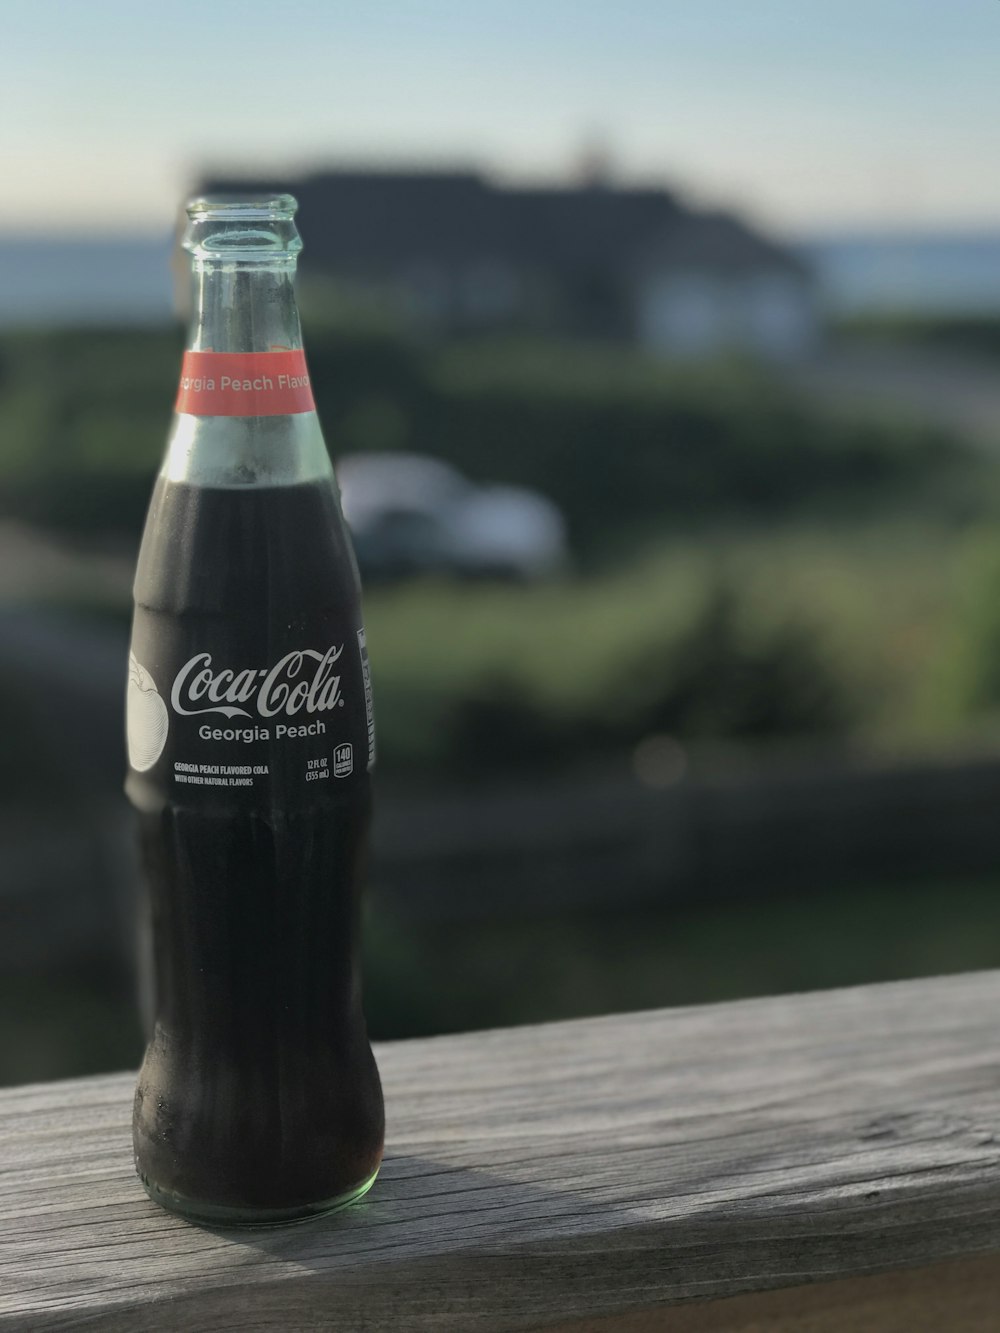 Coca-Cola Georgia Peach cola bottle